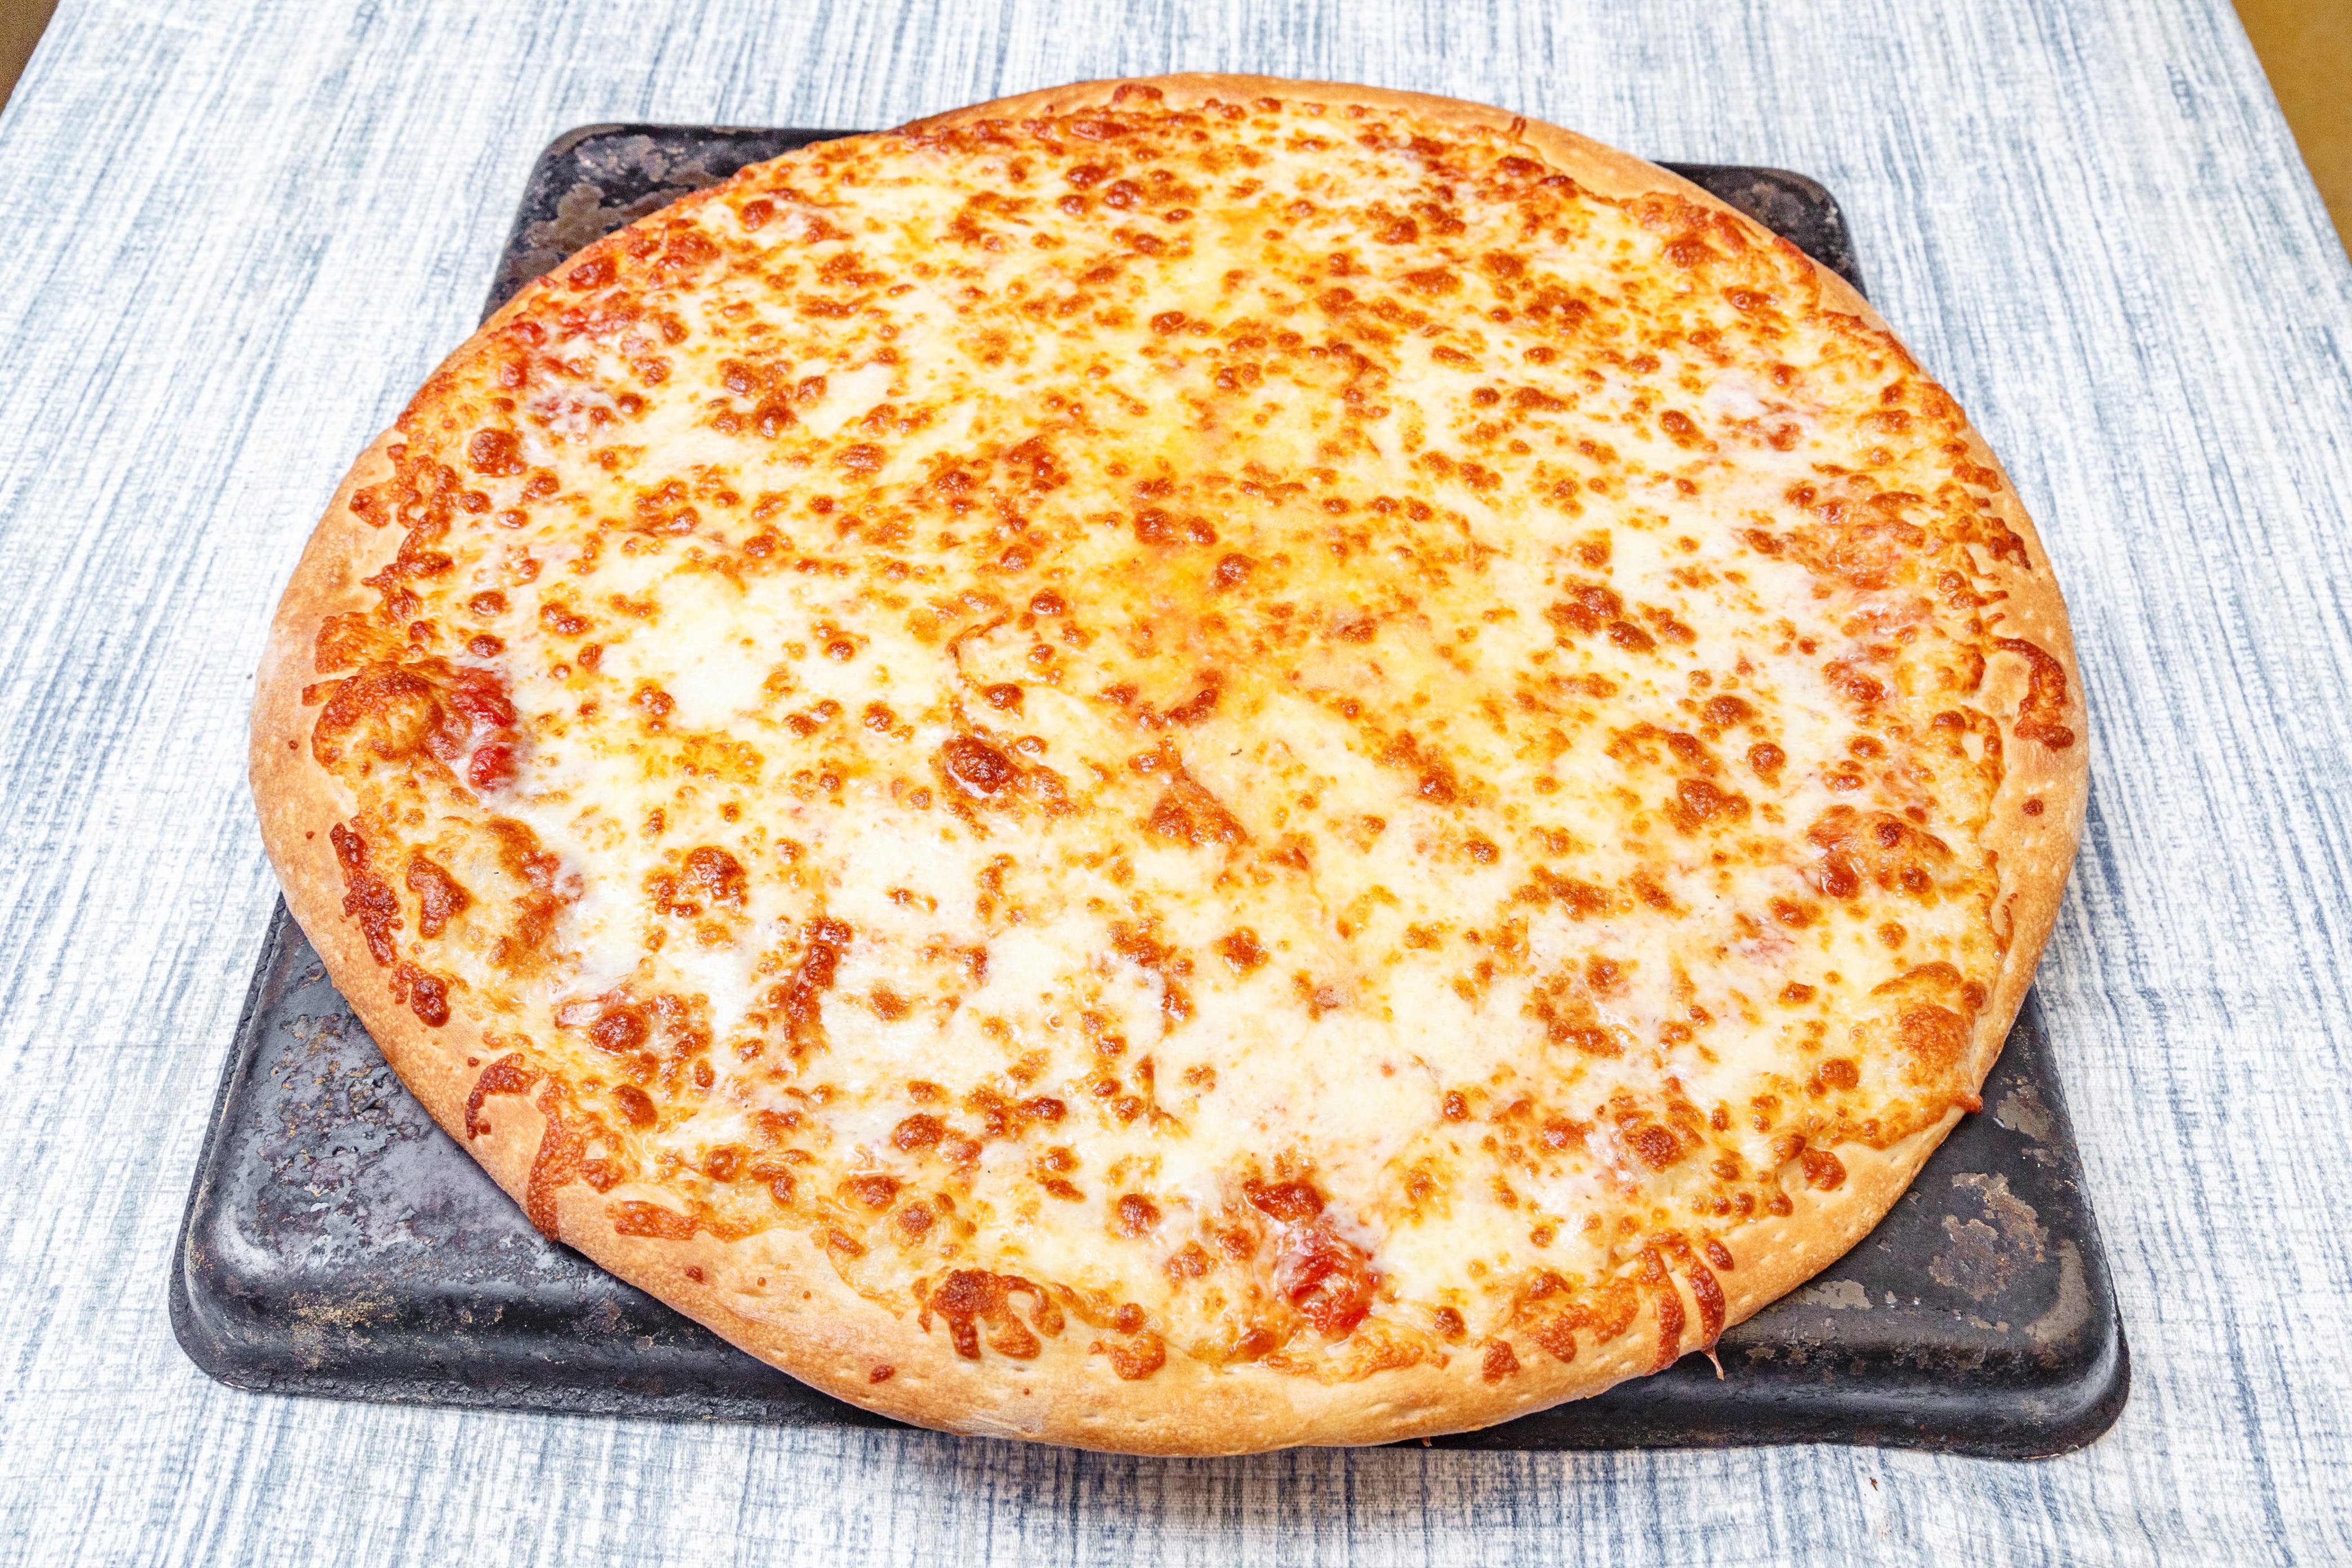 Pan Fried Sicilian Pizza found locally in NE PA! : r/Pizza